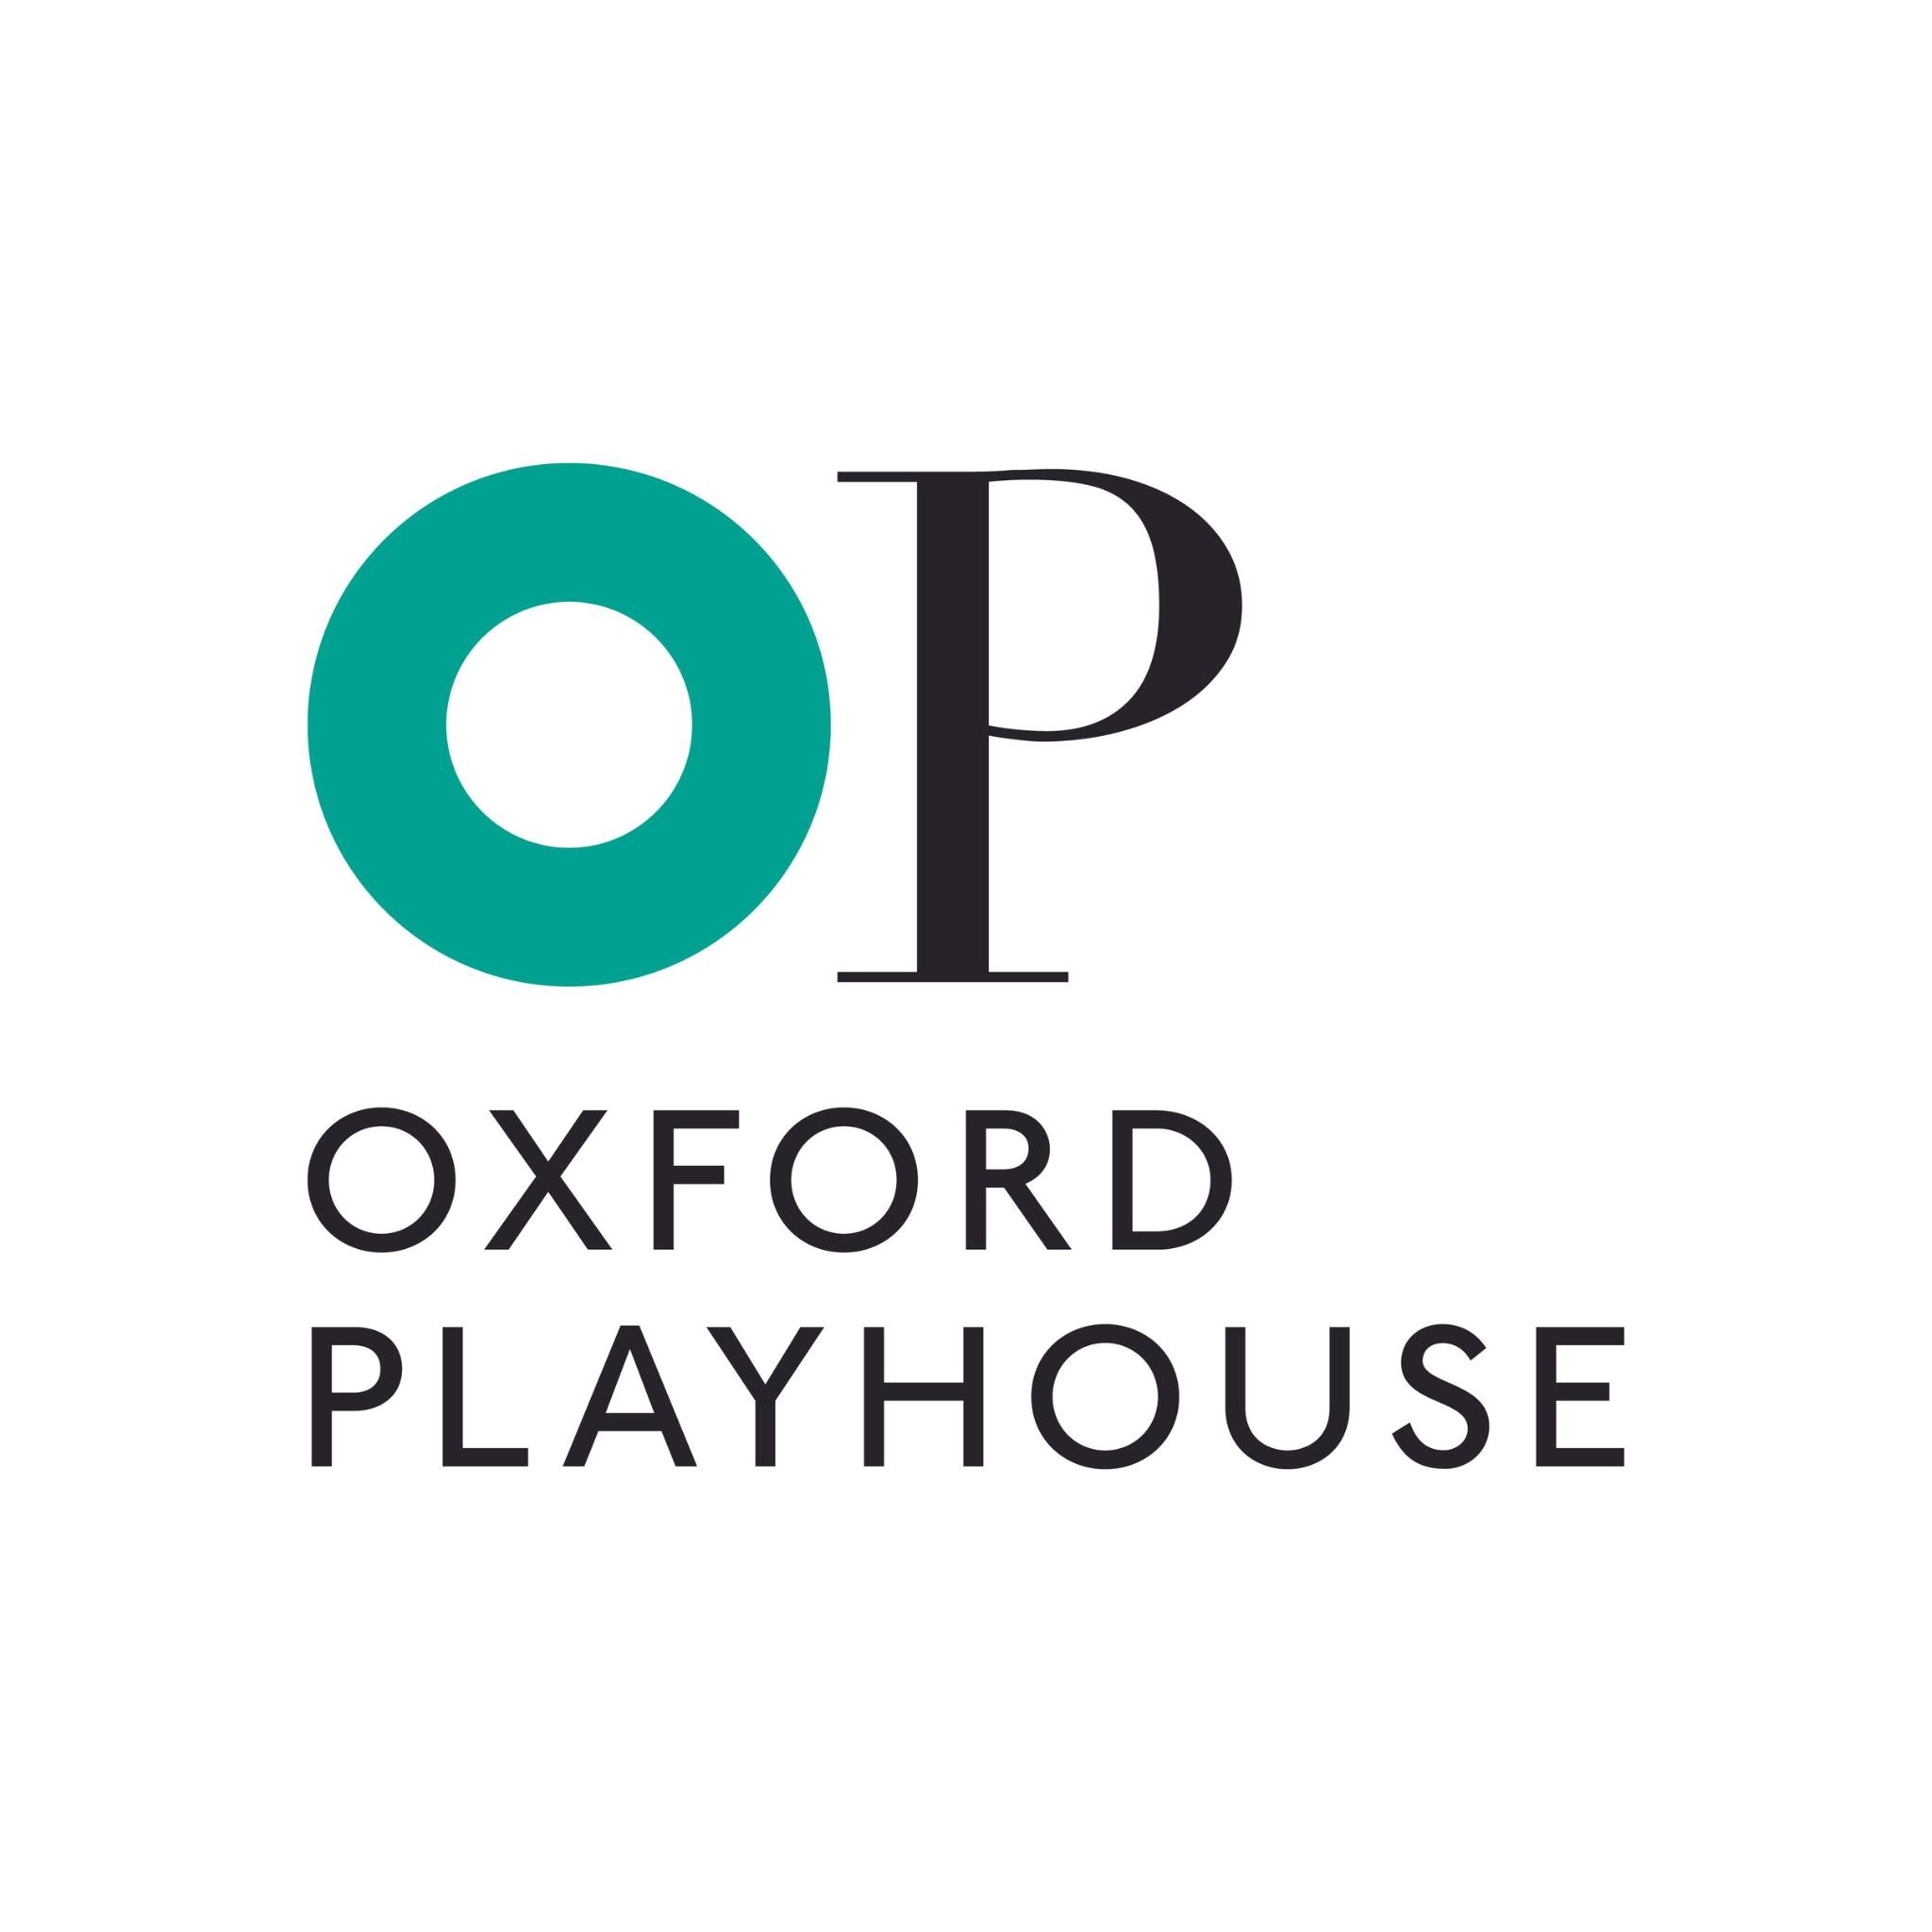 Oxford Playhouse's logo